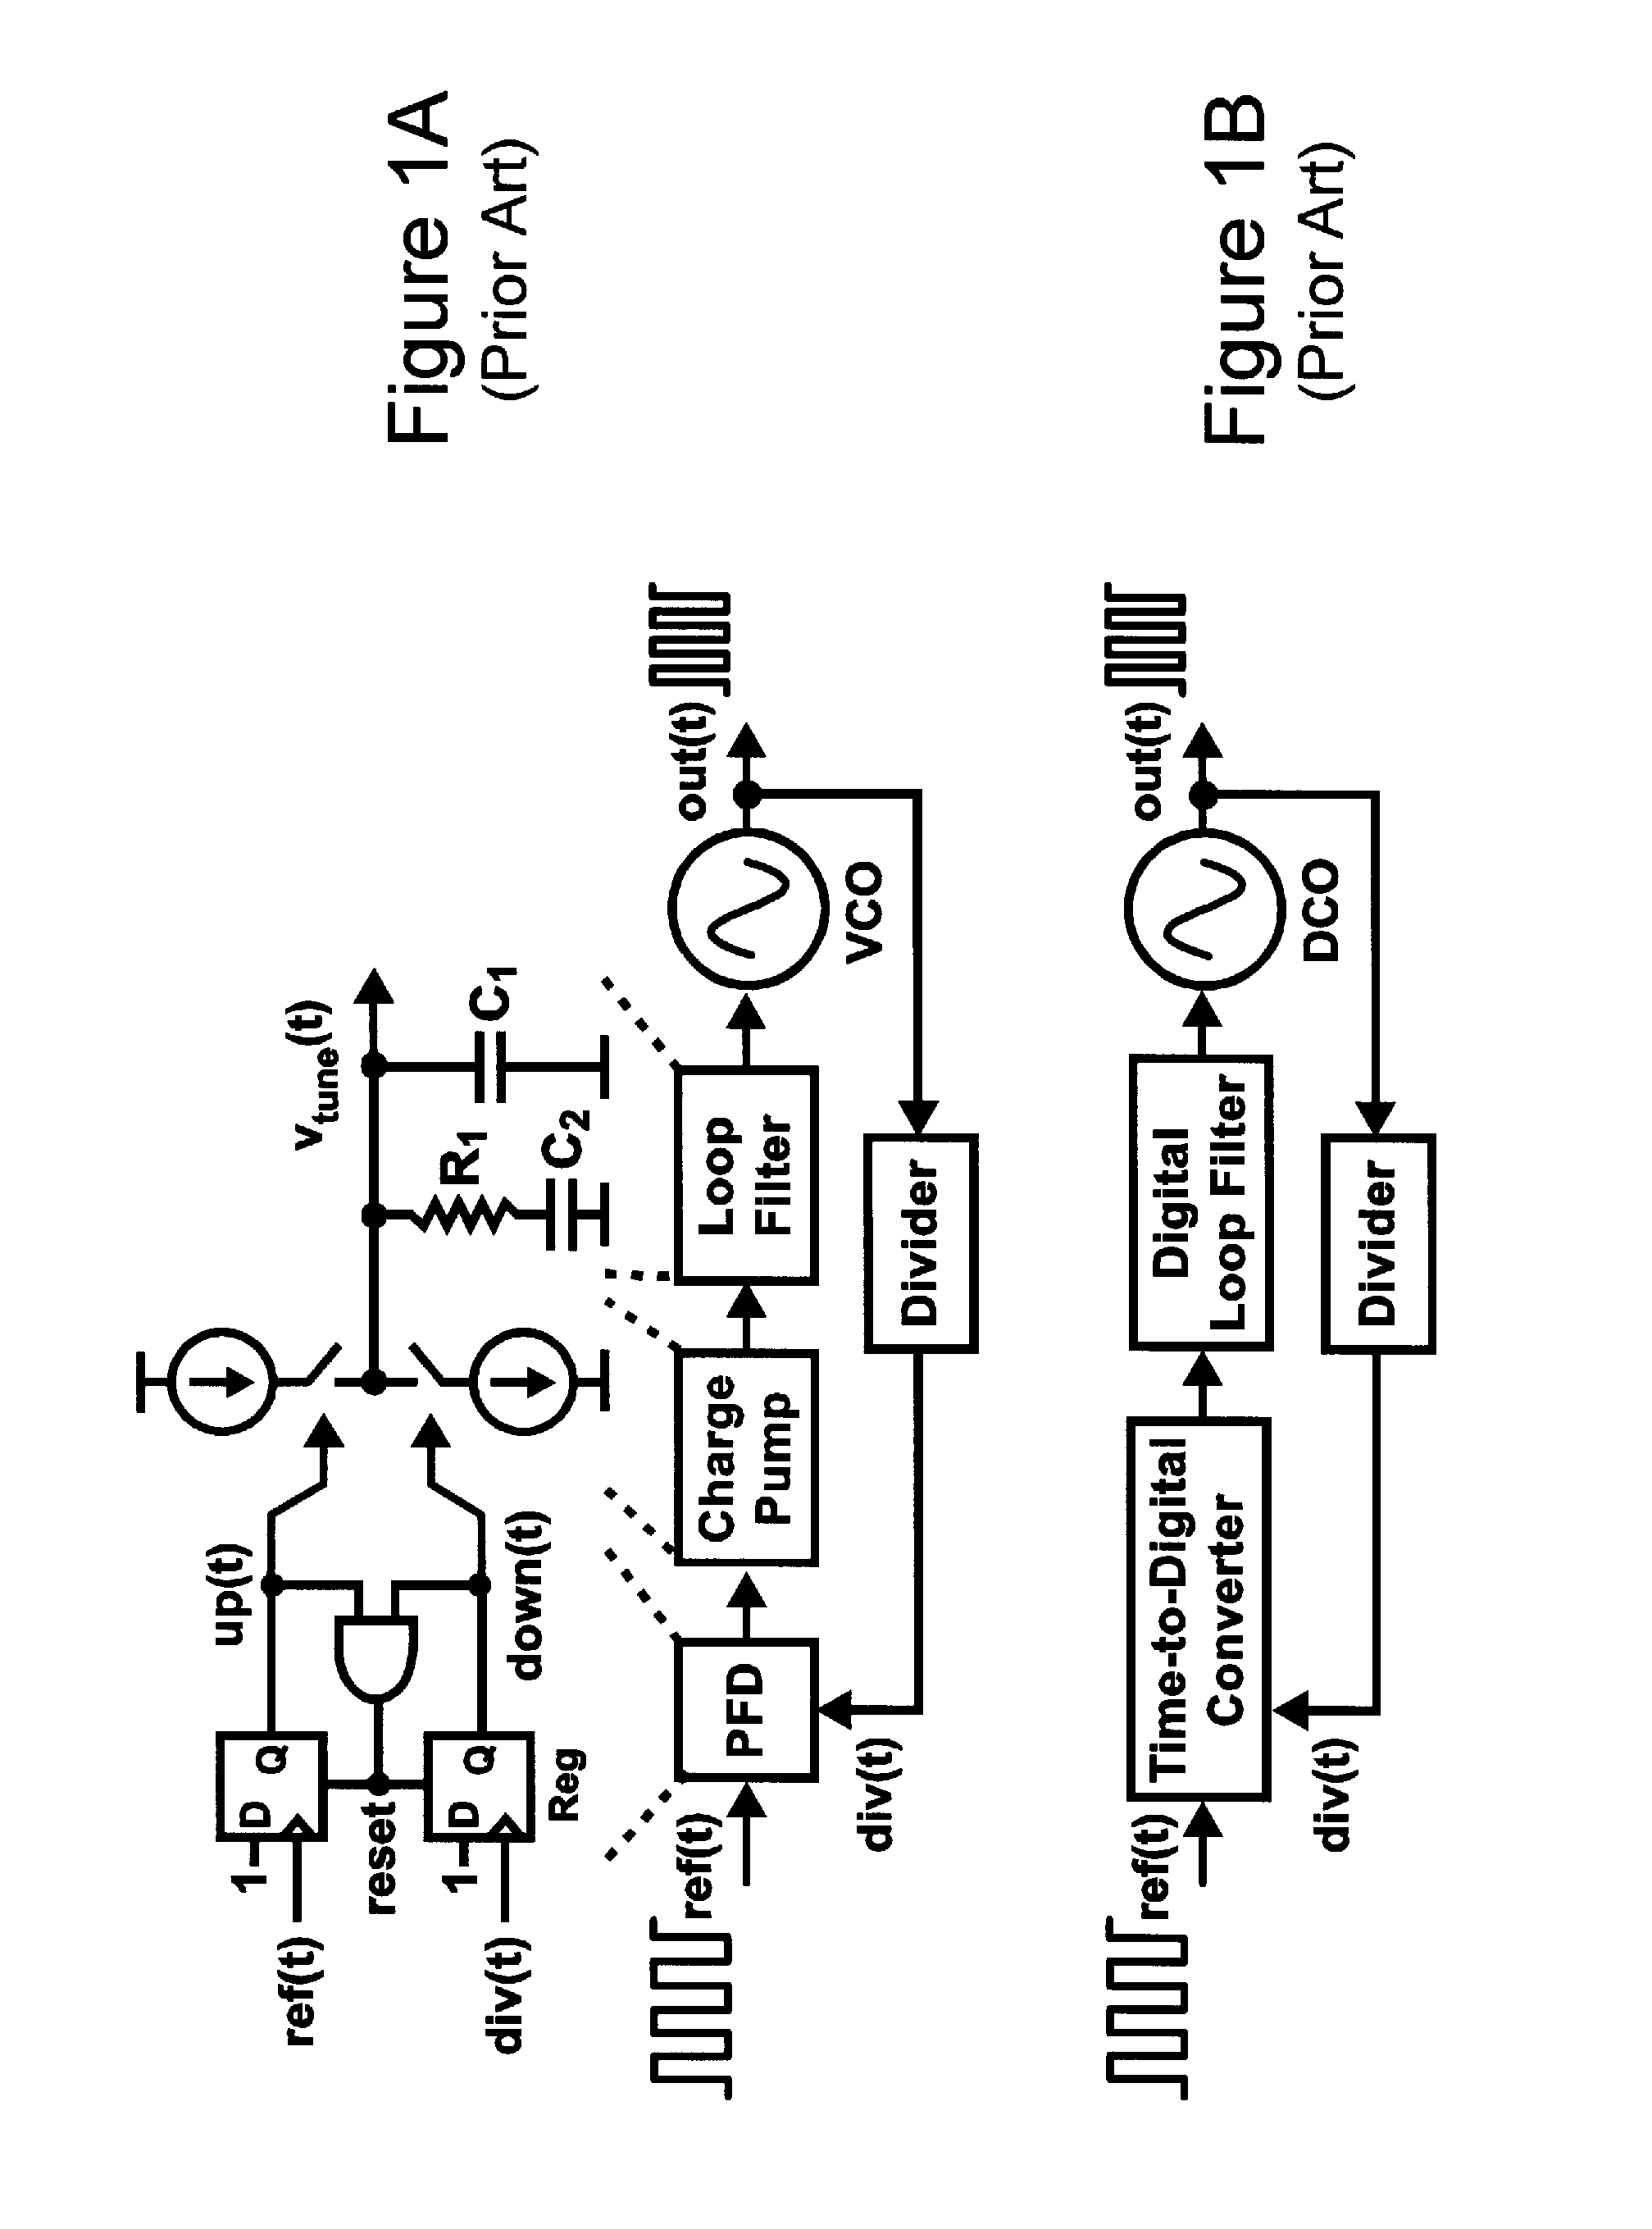 Phase locked loop circuitry having switched resistor loop filter circuitry, and methods of operating same